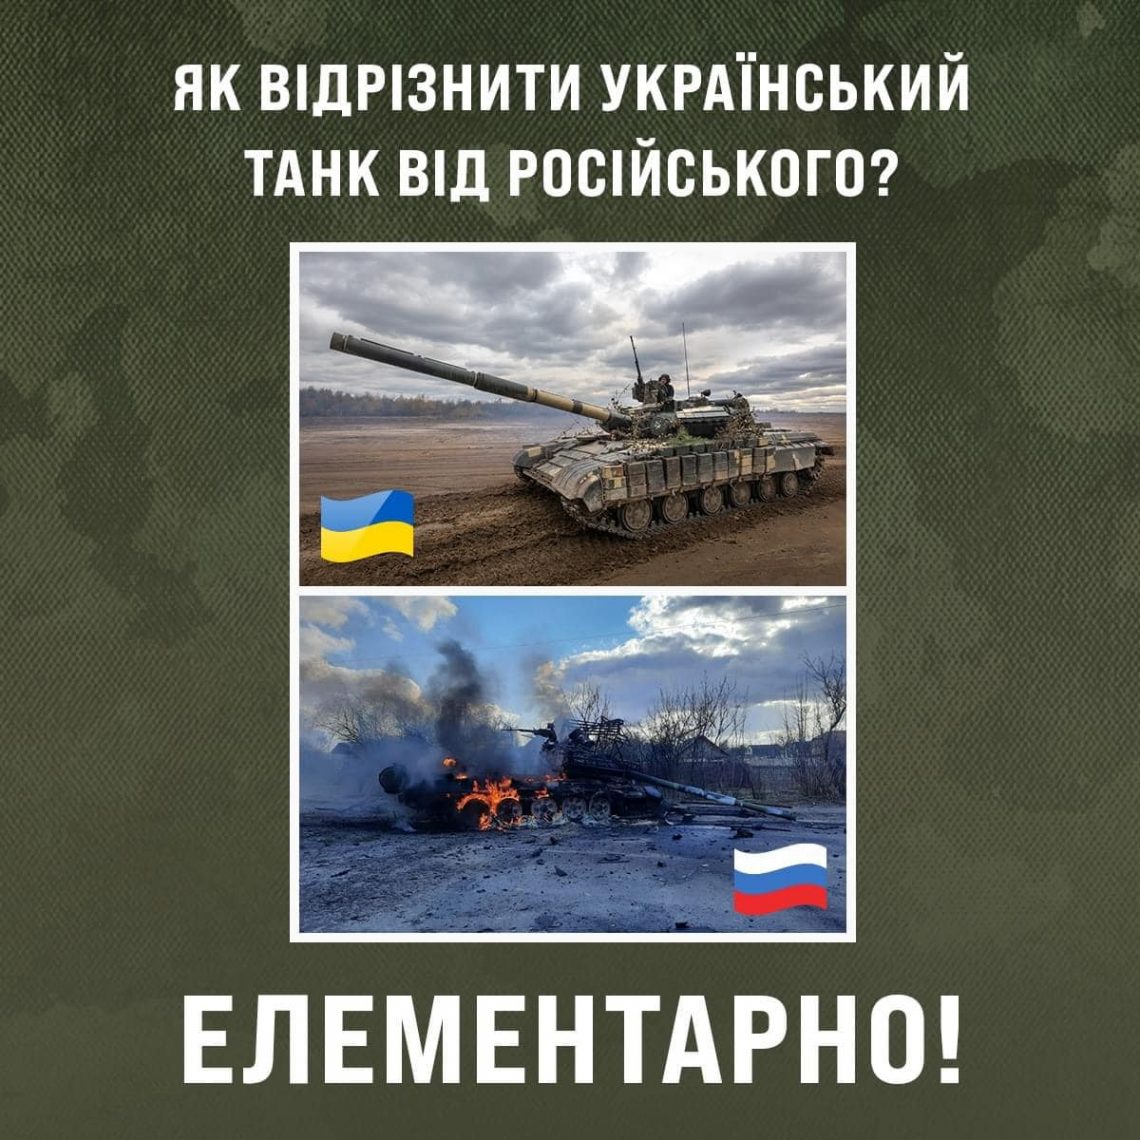 memy pro rosijsku agresiyu proty ukrayiny 15